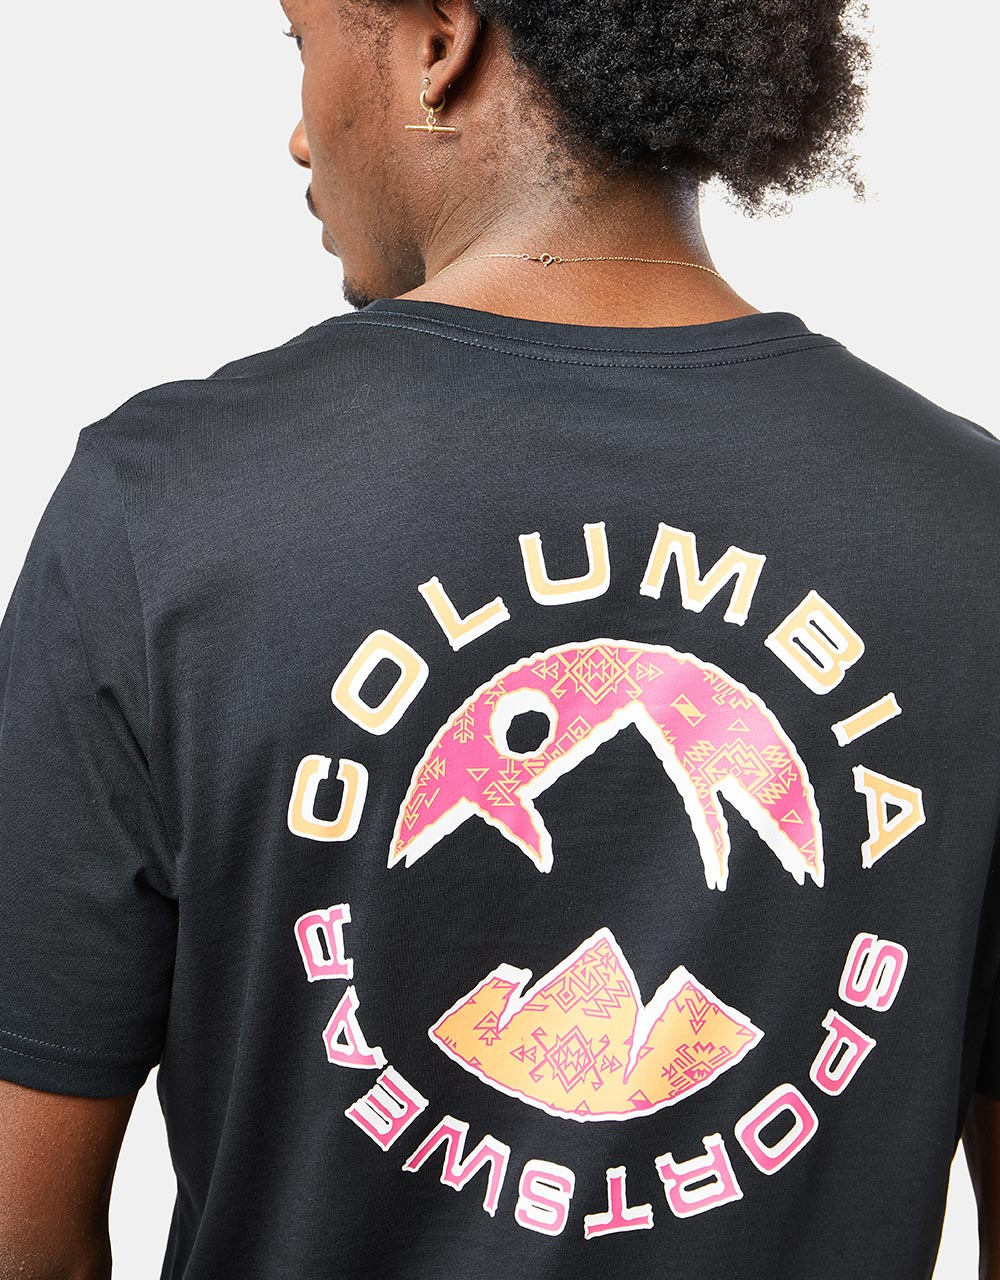 Columbia Rapid Ridge™ Back Graphic II T-Shirt - Black/Circular Heritage Graphic